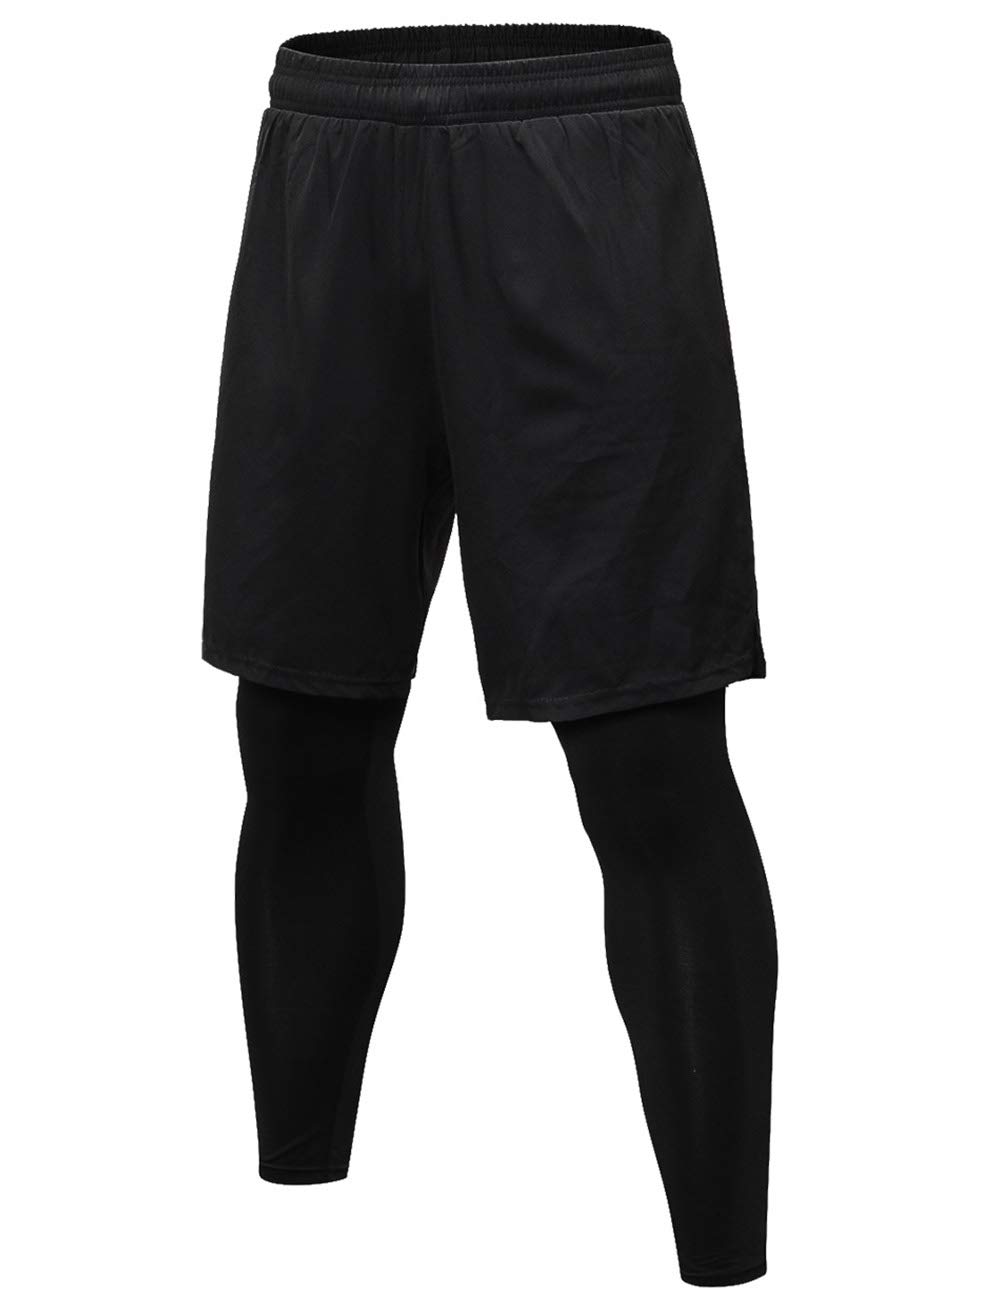 Toptie Men's Long Sleeve Compression Shirt, Athletic Workout Base